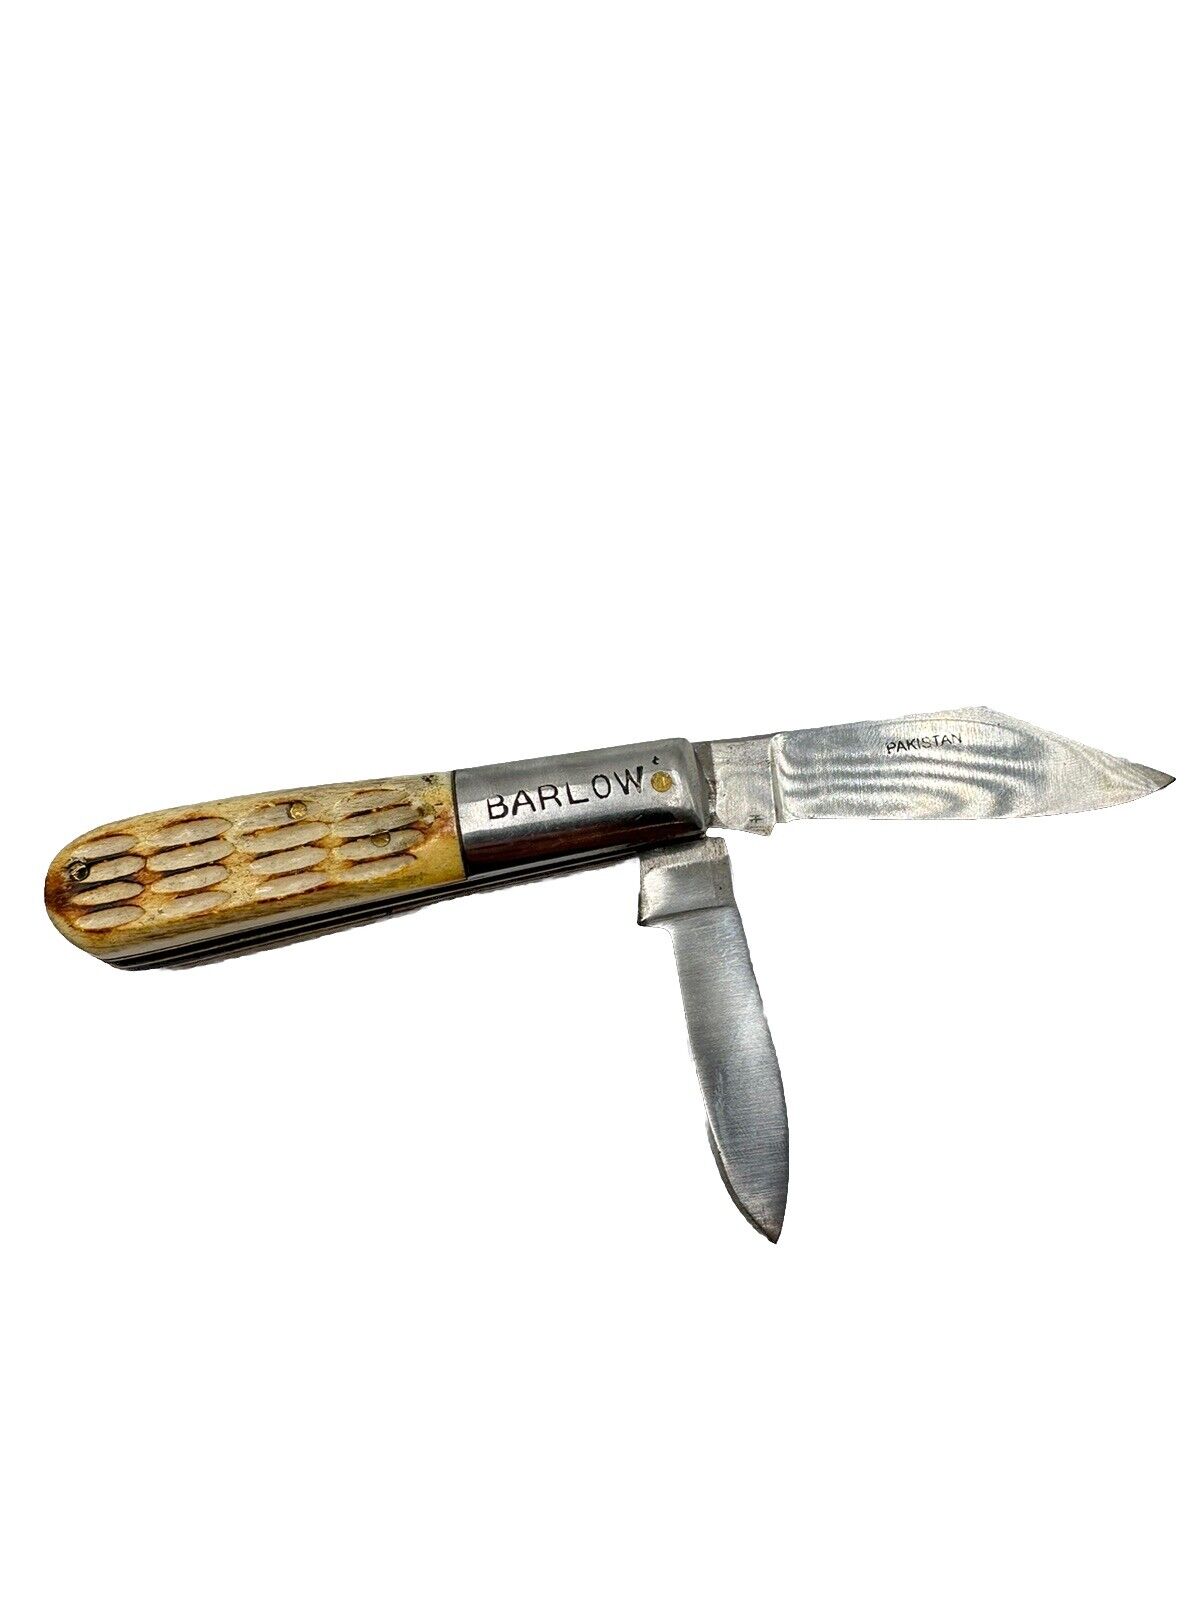 Vintage Barlow 2 Blade Pocket Knife Good Condition B57